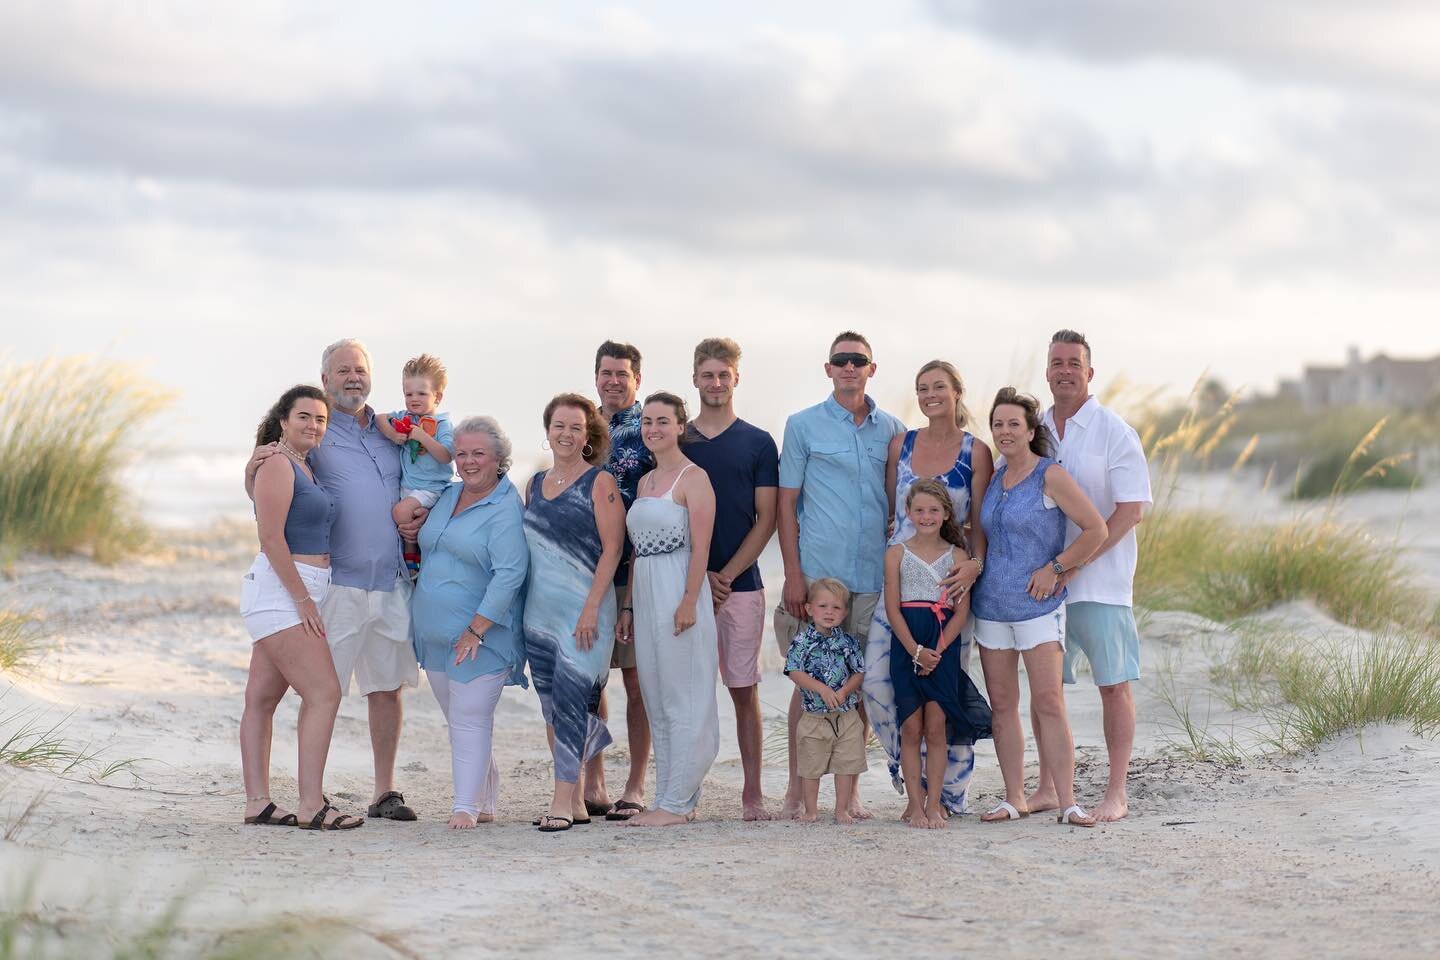 Having fun under the sun! @reshhbeachrentals #whatitsallabout #funfamilies #sunset #happyfamily #hiltonheadisland #dunes #beach #sunset #hiltonheadphotographer 
#familyphotography #portraitphotography #beachphotoshoot #beachphotography #beachphotogra